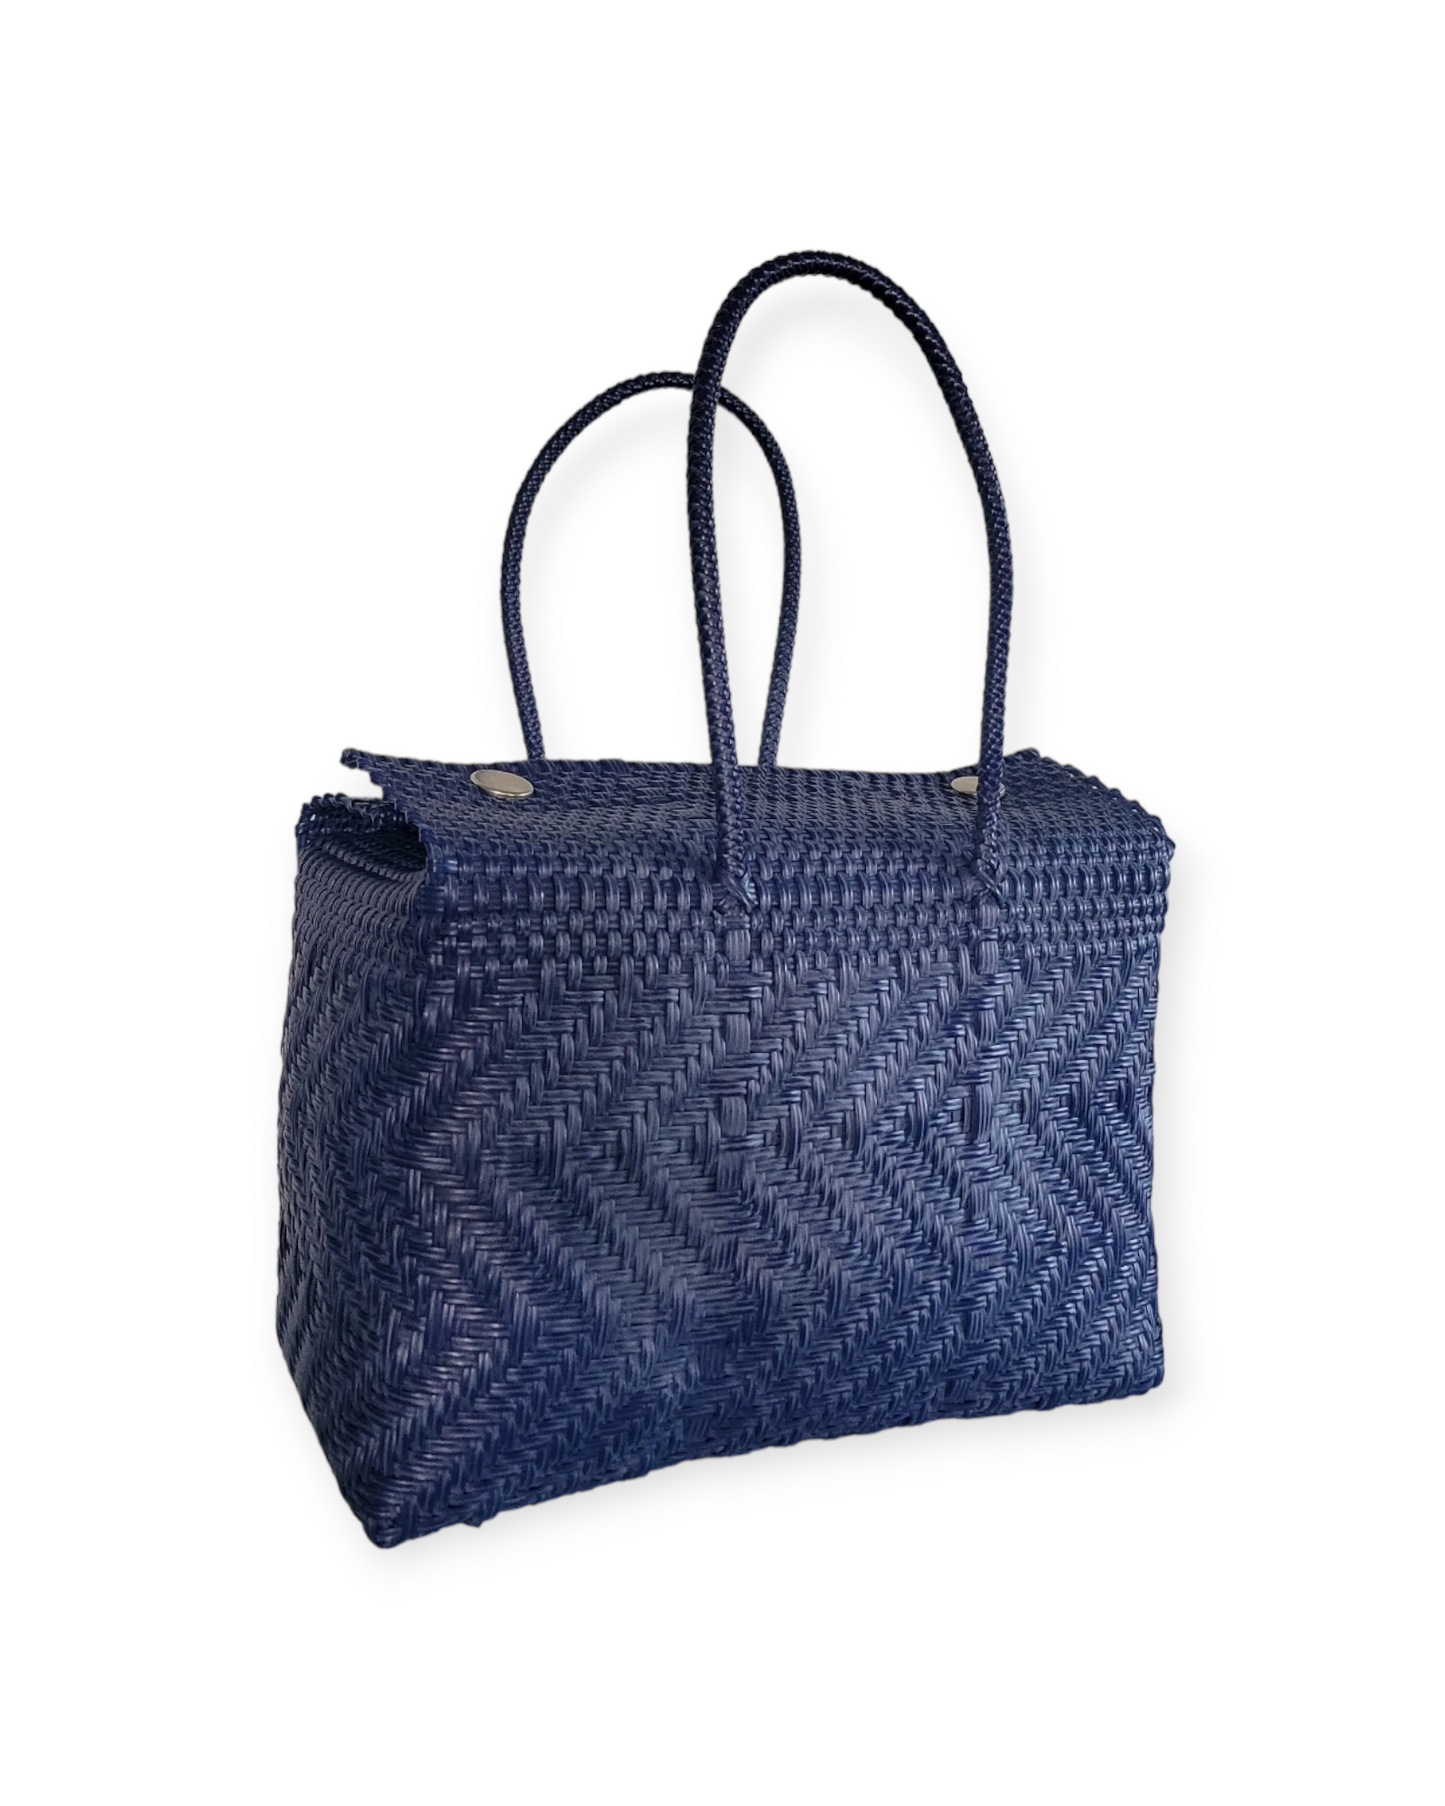 Be Praia | Navy XL Basket | Eco-Friendly Handwoven Bag